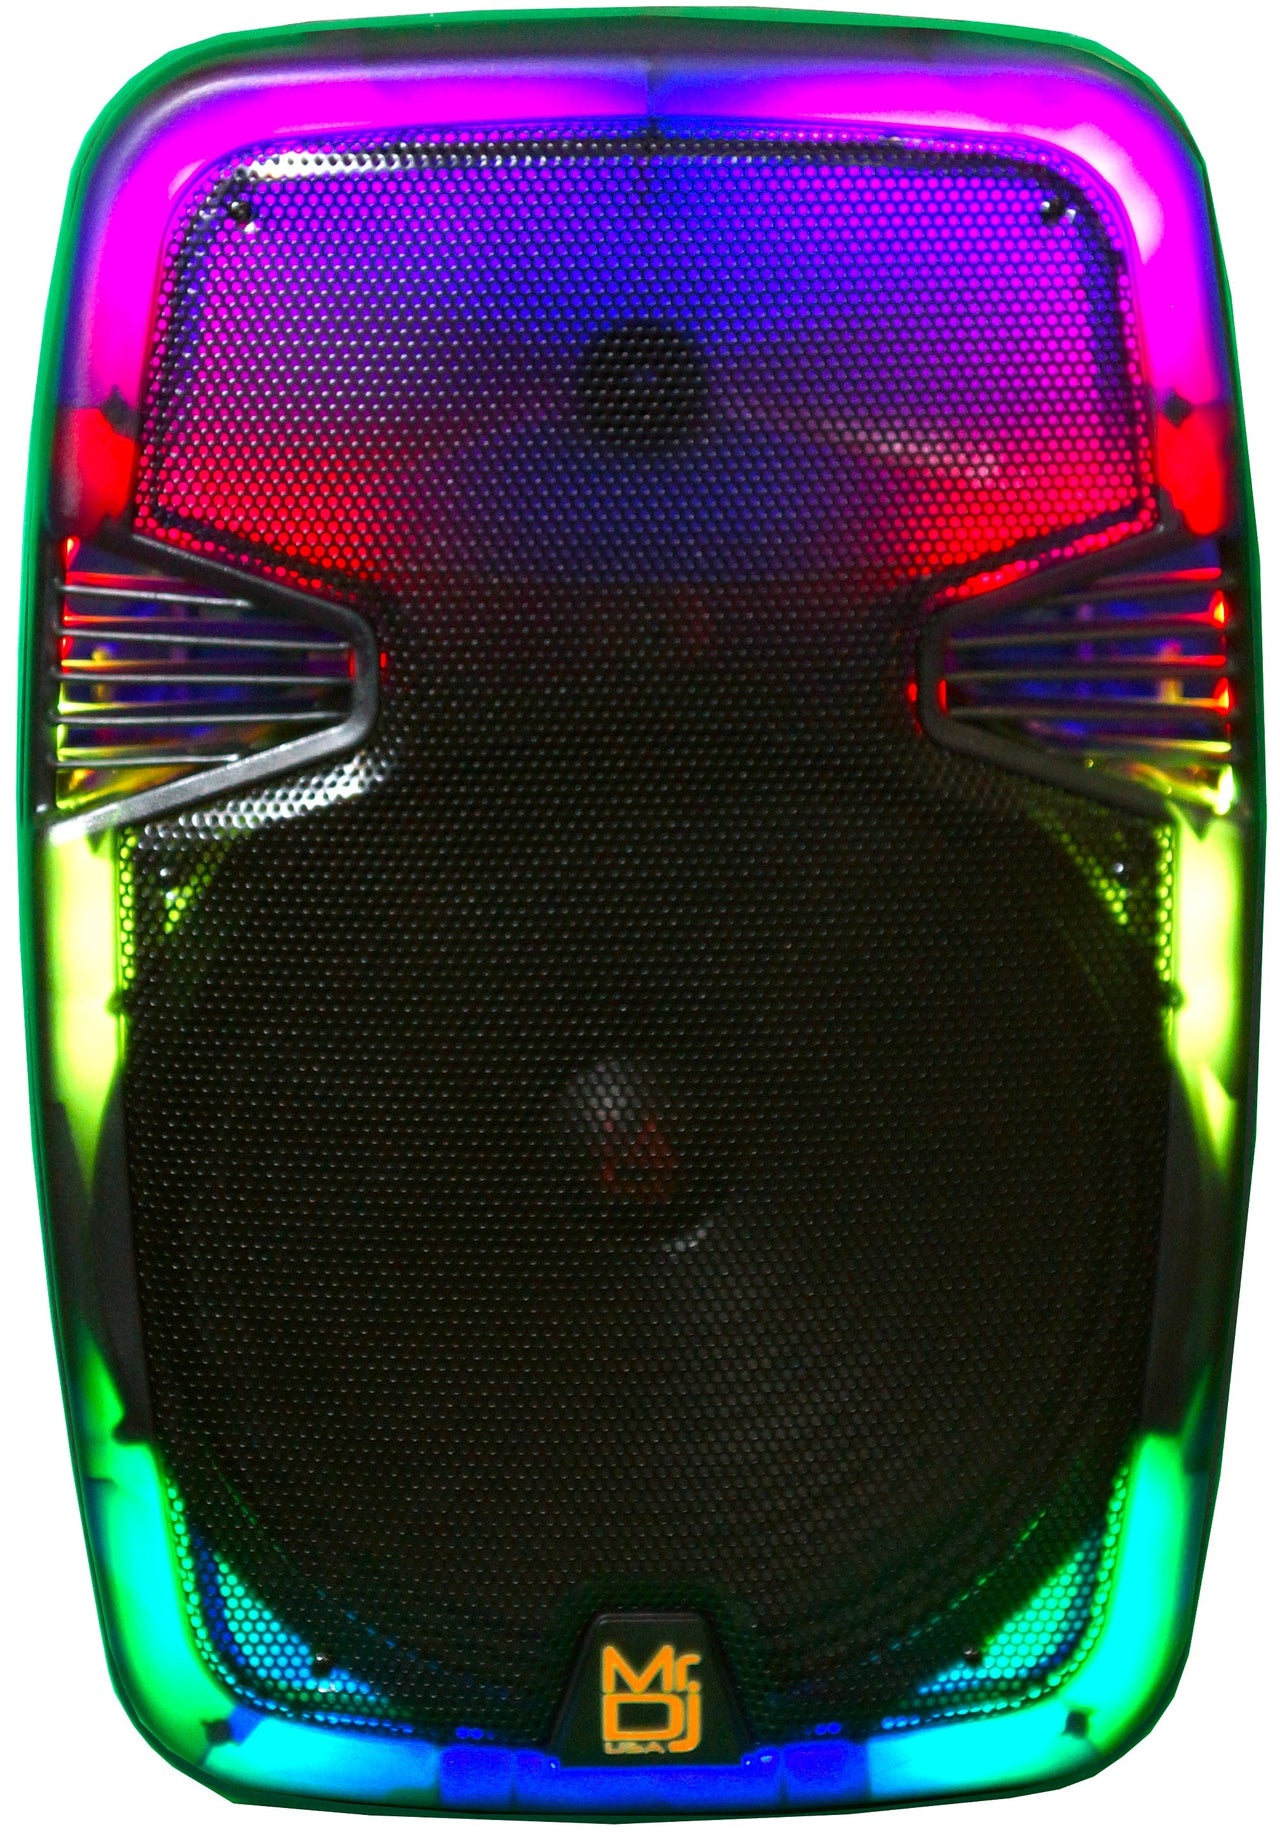 MR DJ PL15FLAME 15" Portable Translucent Trolley PA DJ Active Powered Bluetooth TWS Speaker 3500 Watts LCD/MP3/USB/micro SD